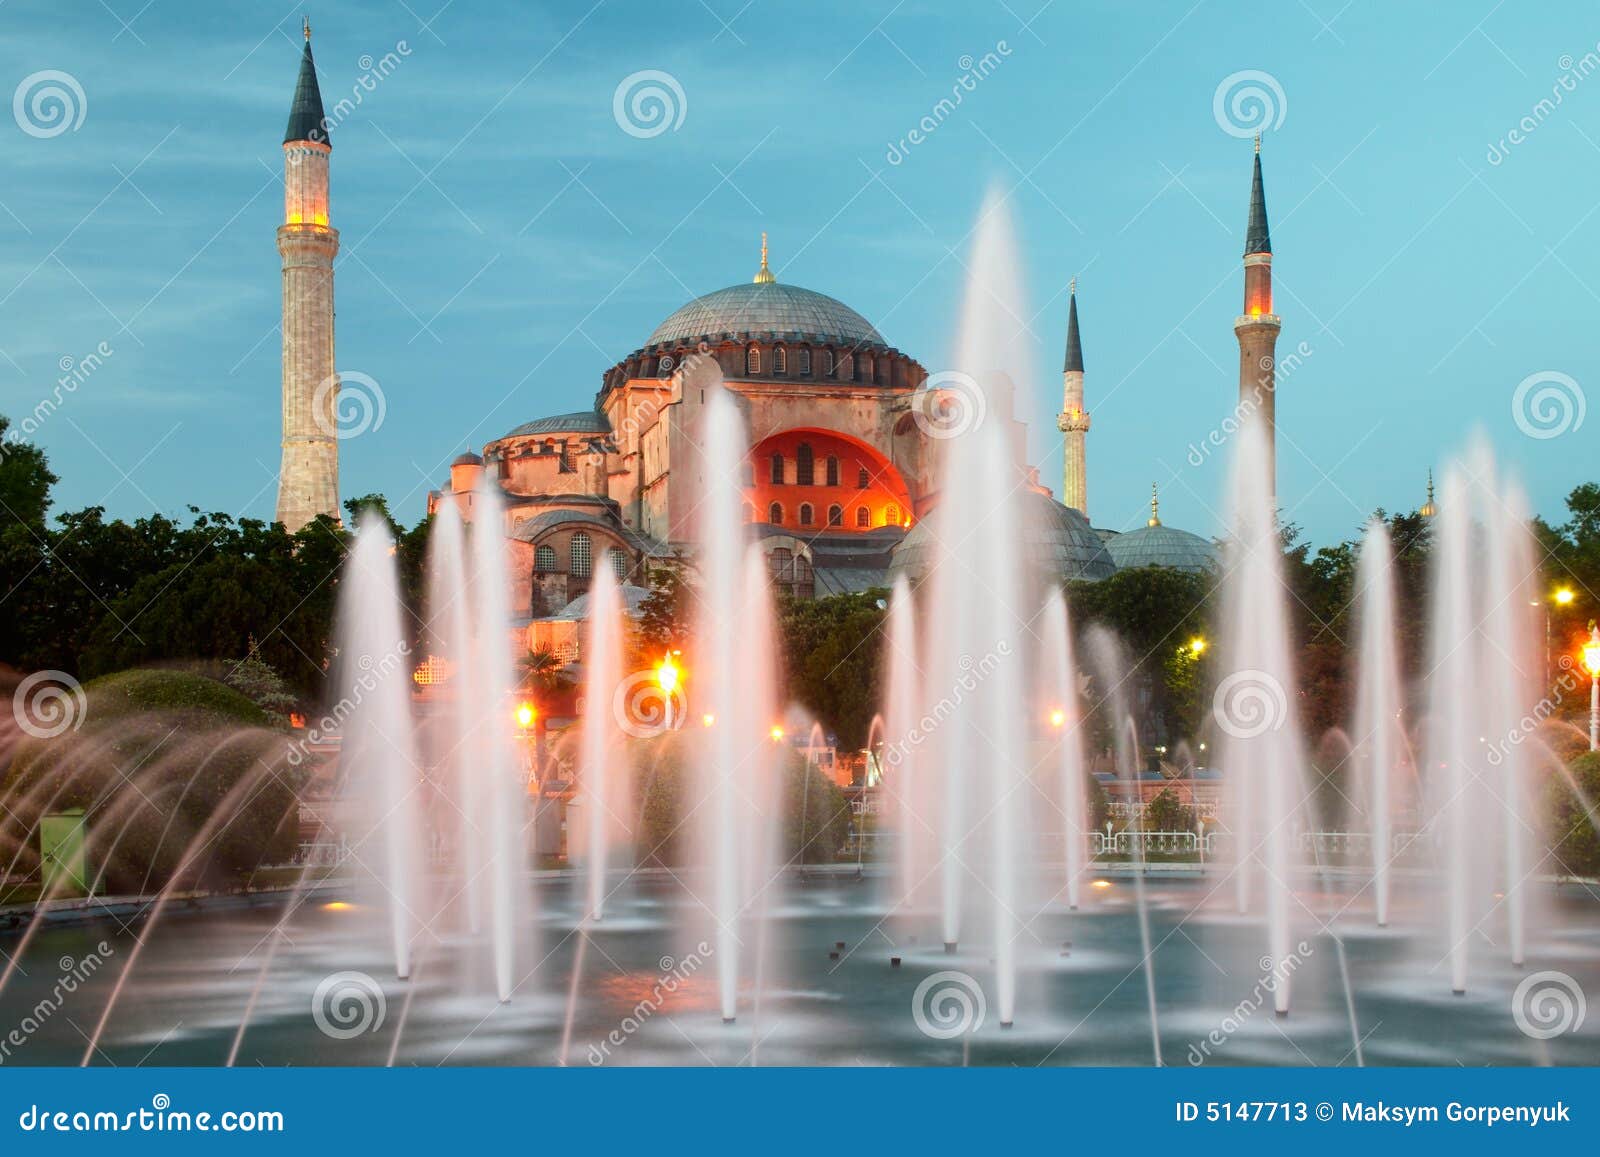 hagia sophia in istanbul with illumination